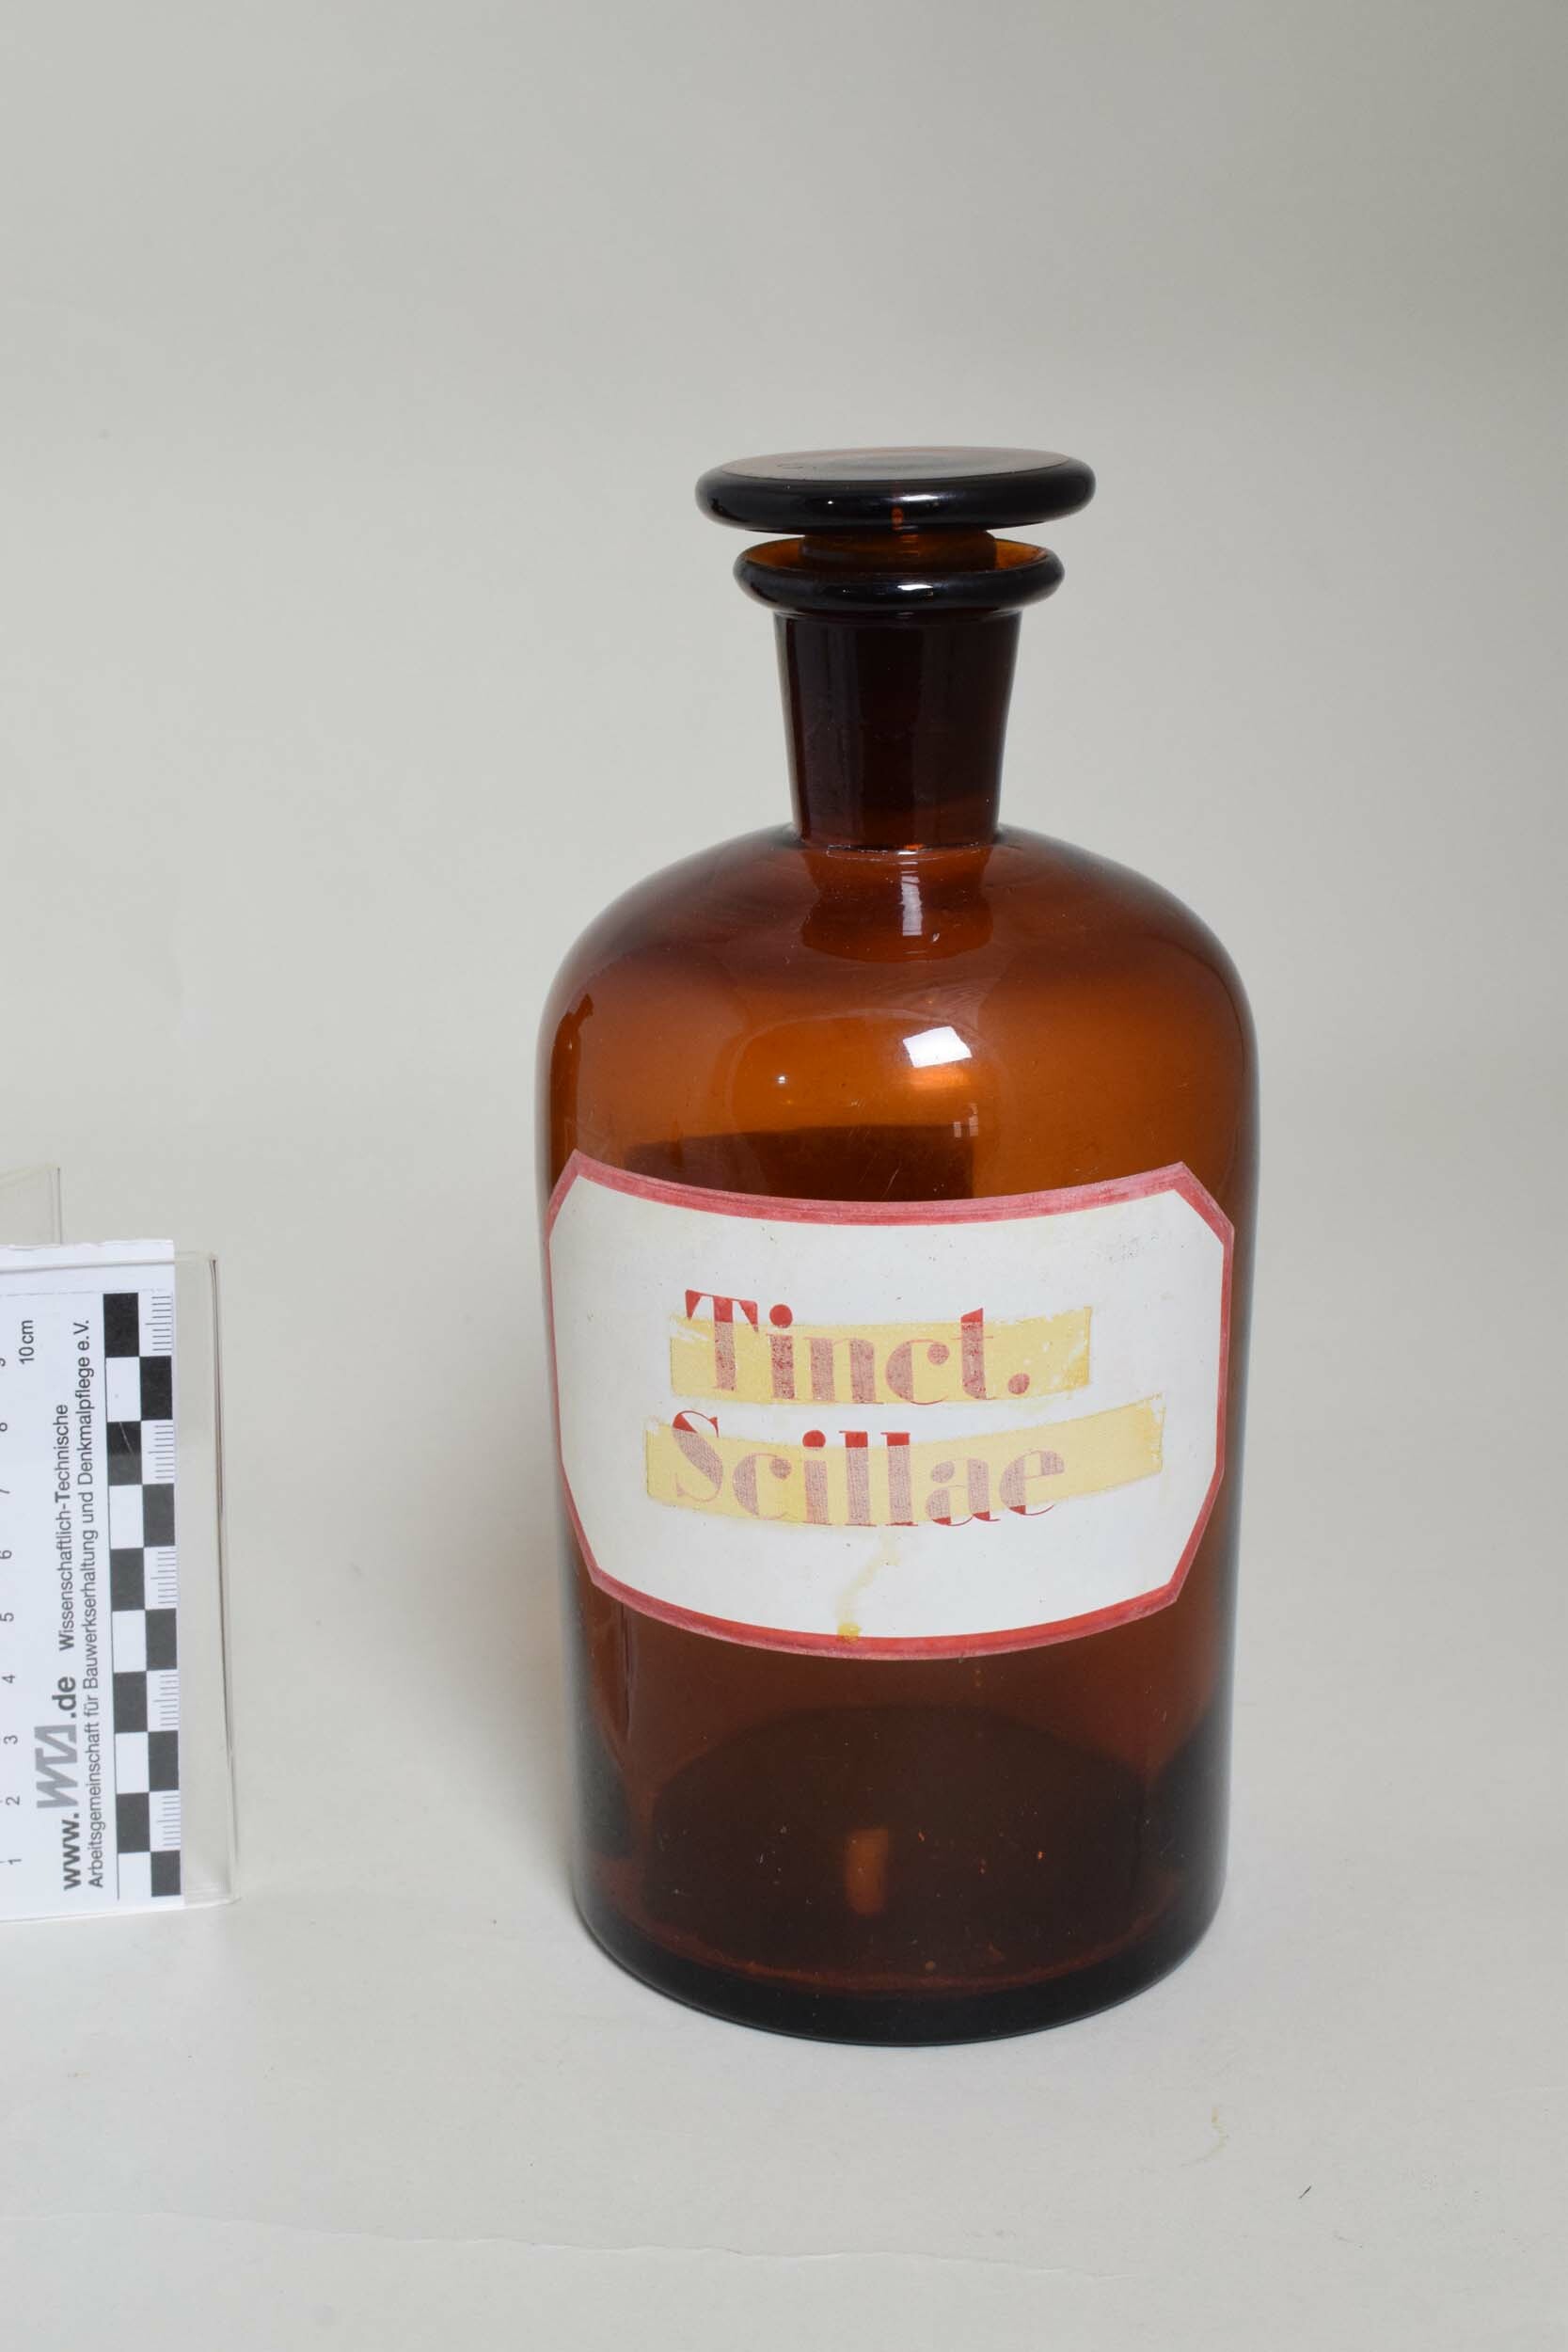 Apothekenflasche "Tinct. Scillae" (Heimatmuseum Dohna CC BY-NC-SA)